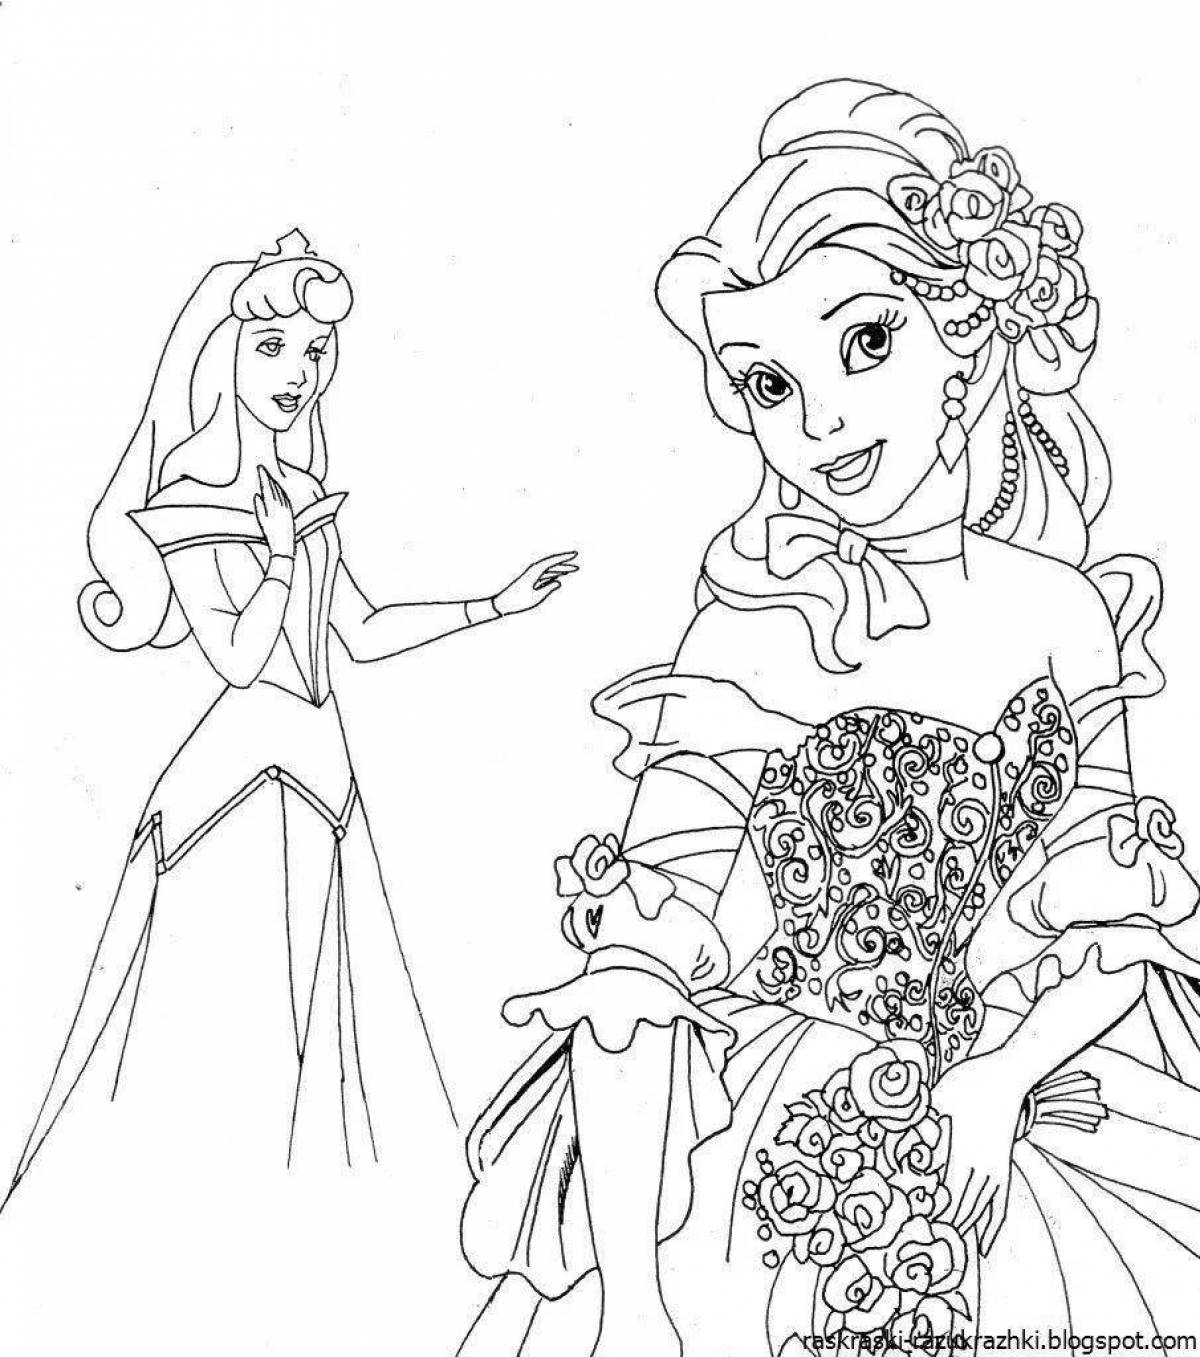 Adorable Disney princess coloring book for kids